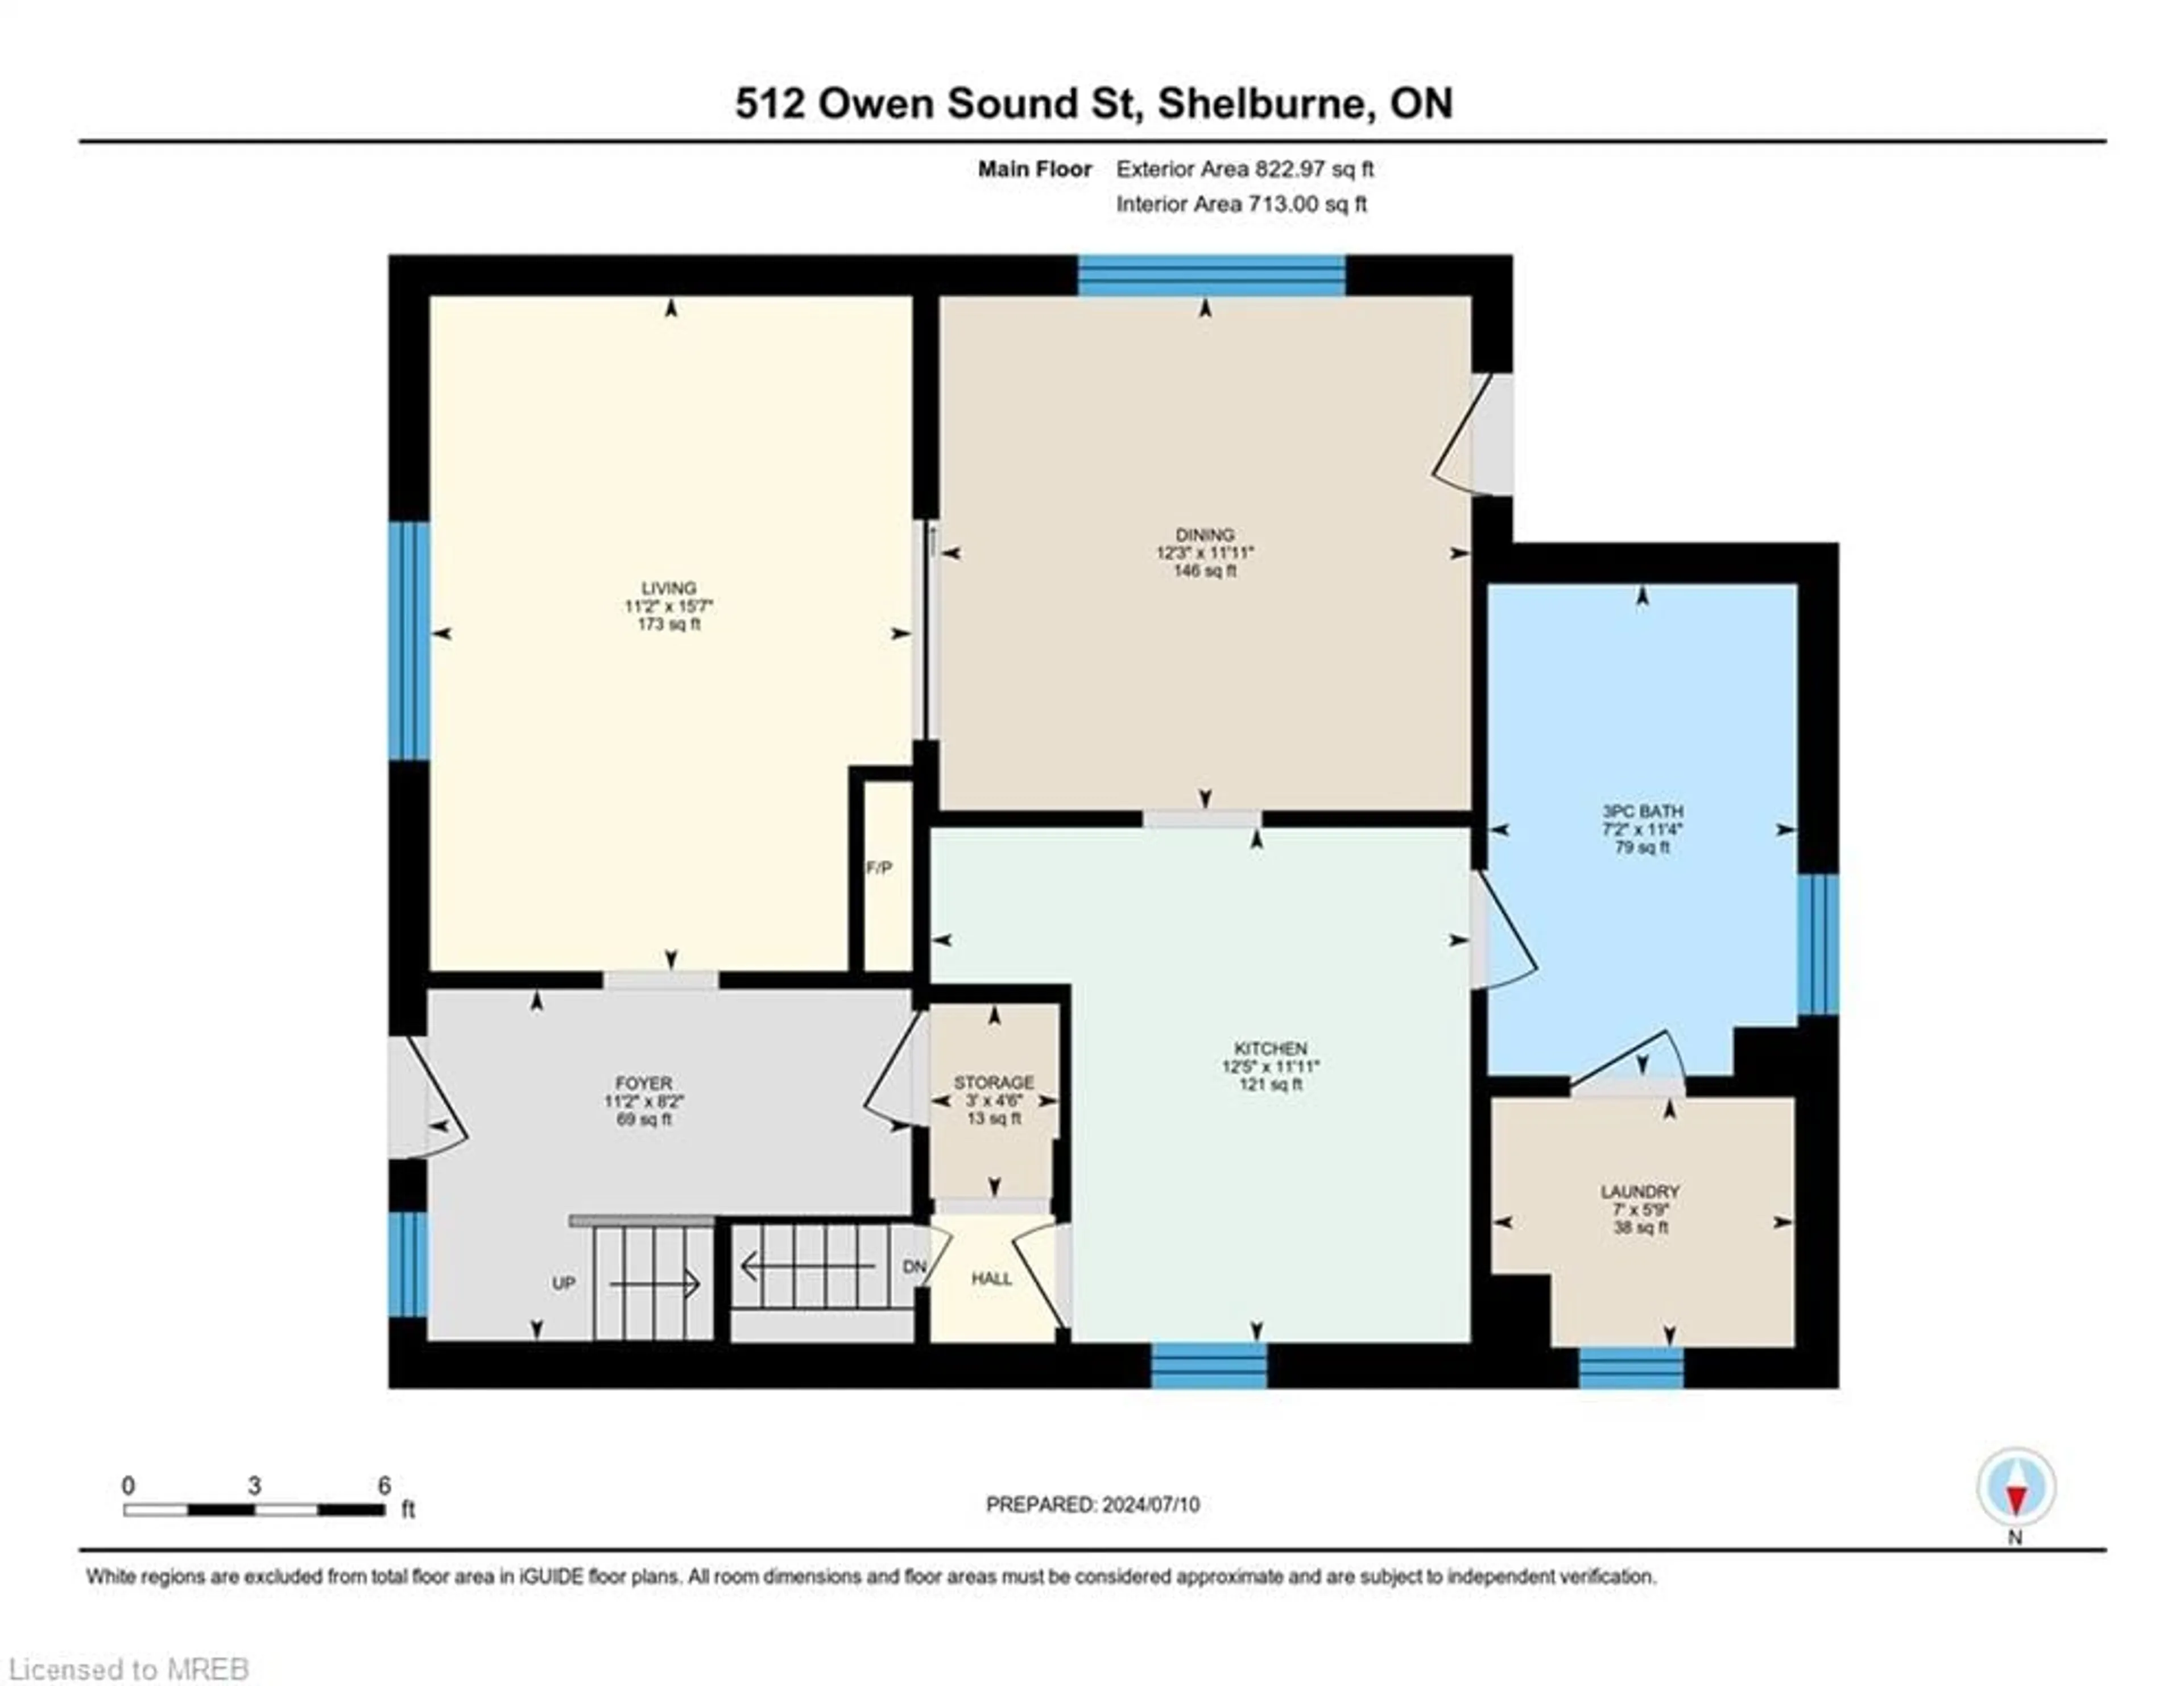 Floor plan for 512 Owen Sound St, Shelburne Ontario L0N 1S1